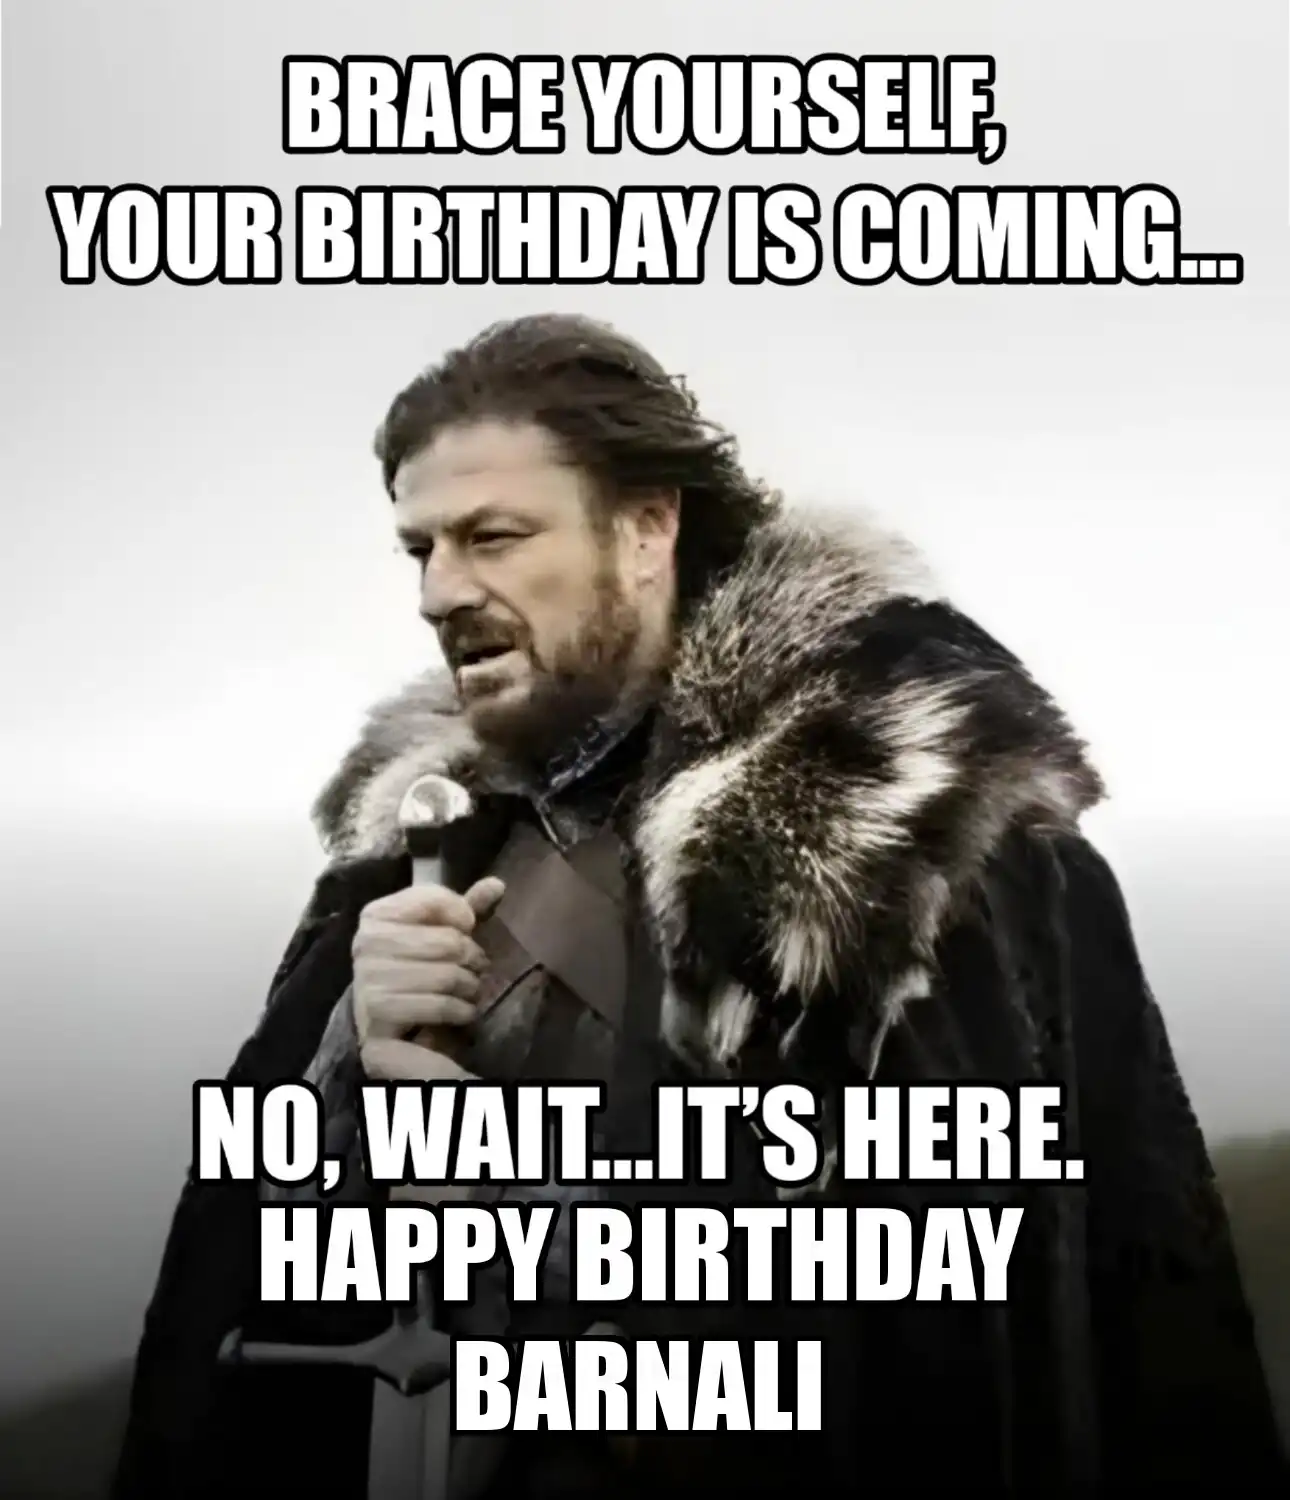 Happy Birthday Barnali Brace Yourself Your Birthday Is Coming Meme